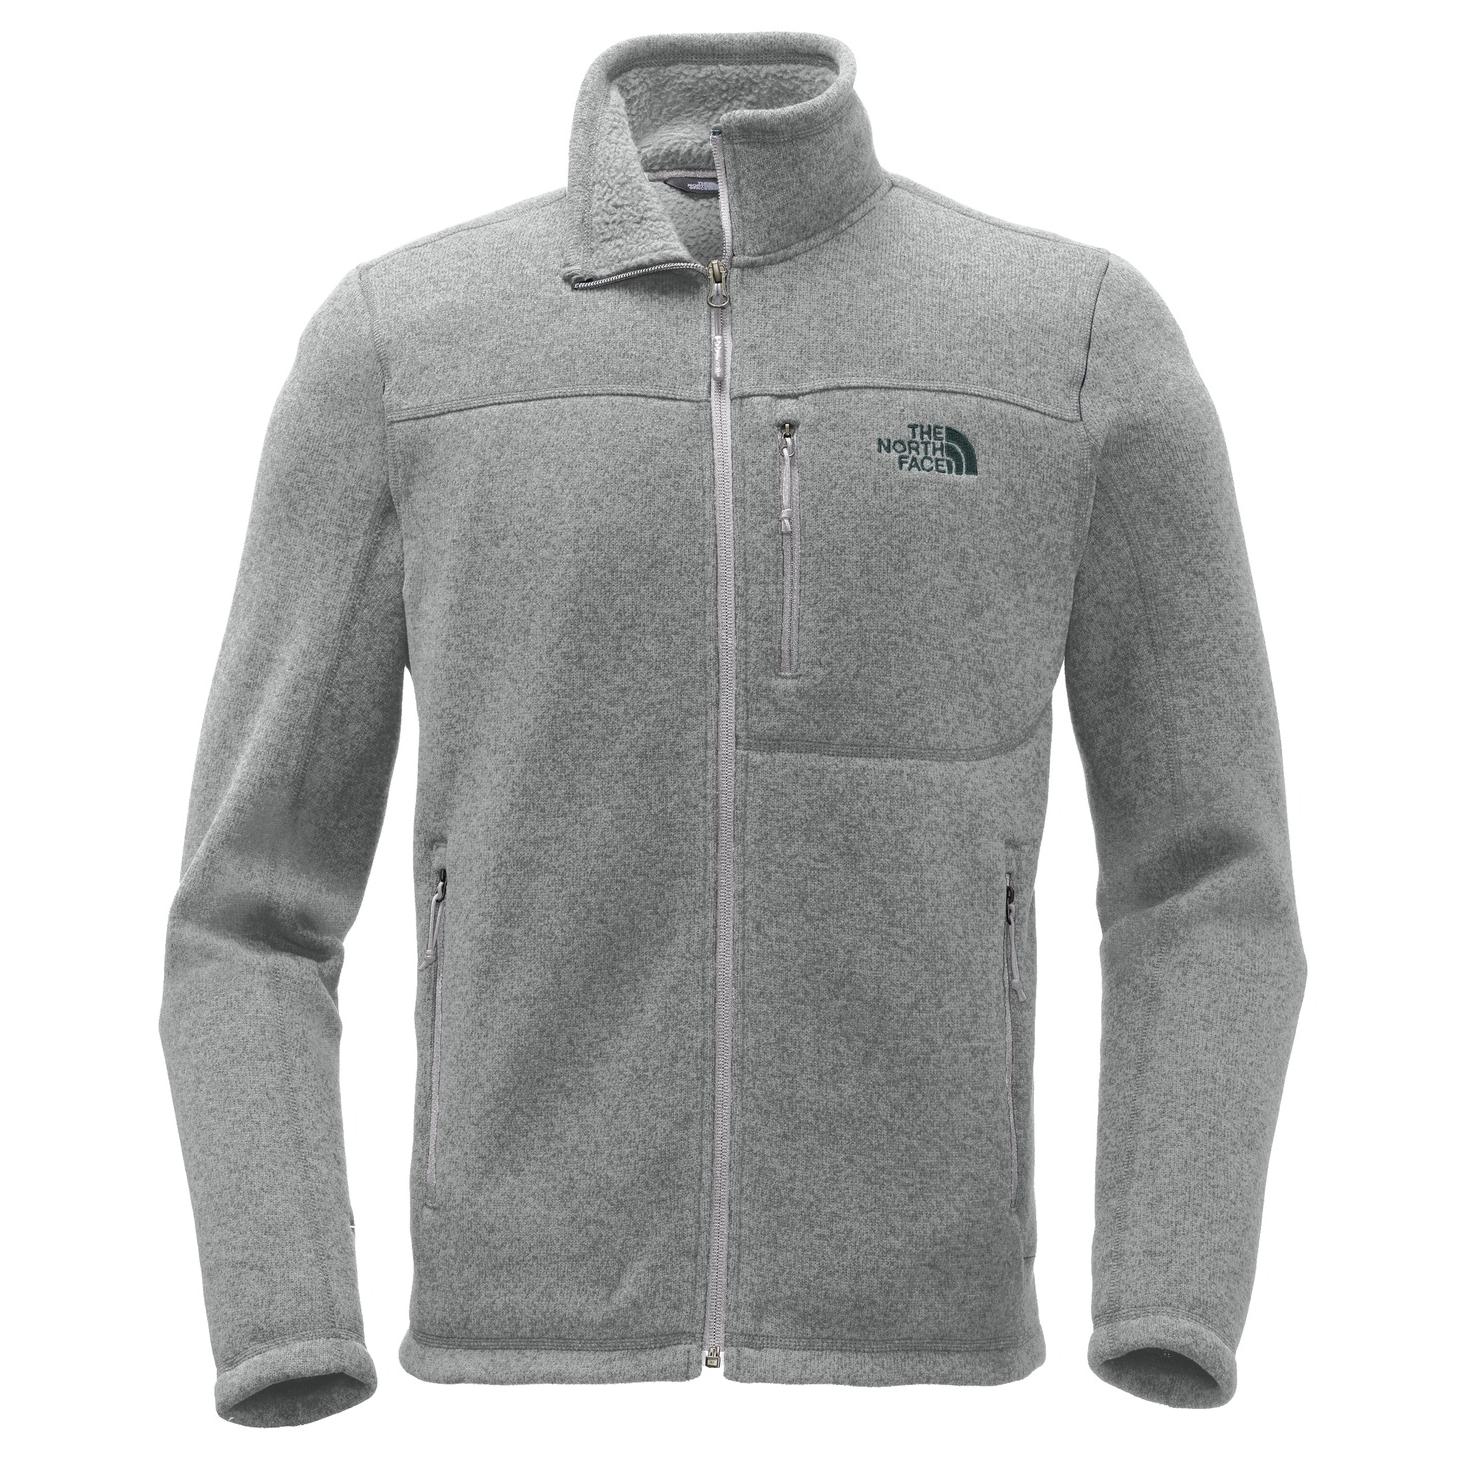 The North Face NF0A3LH7 Sweater Fleece Jacket - Medium Grey Heather ...